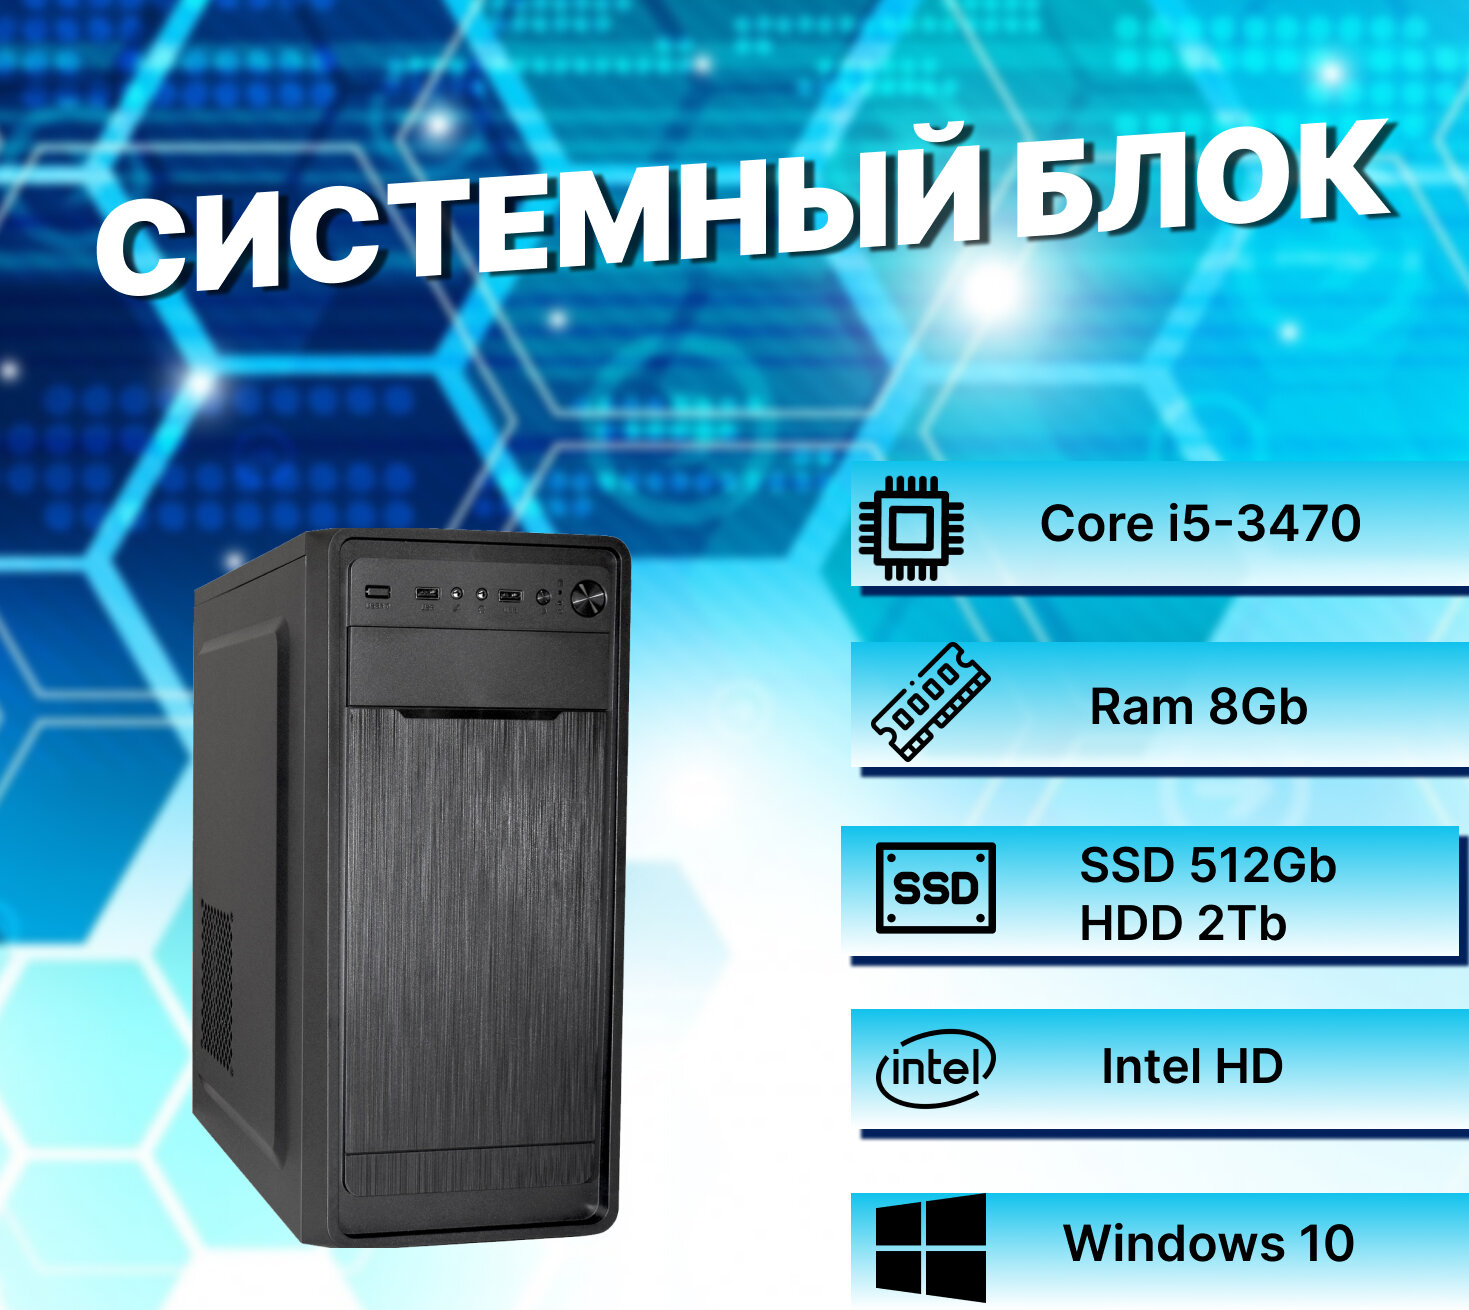 Системный блок Intel Core I5-3470 (3.2ГГц)/ RAM 8Gb/ SSD 512Gb/ HDD 2Tb/ Intel HD/ Windows 10 Pro